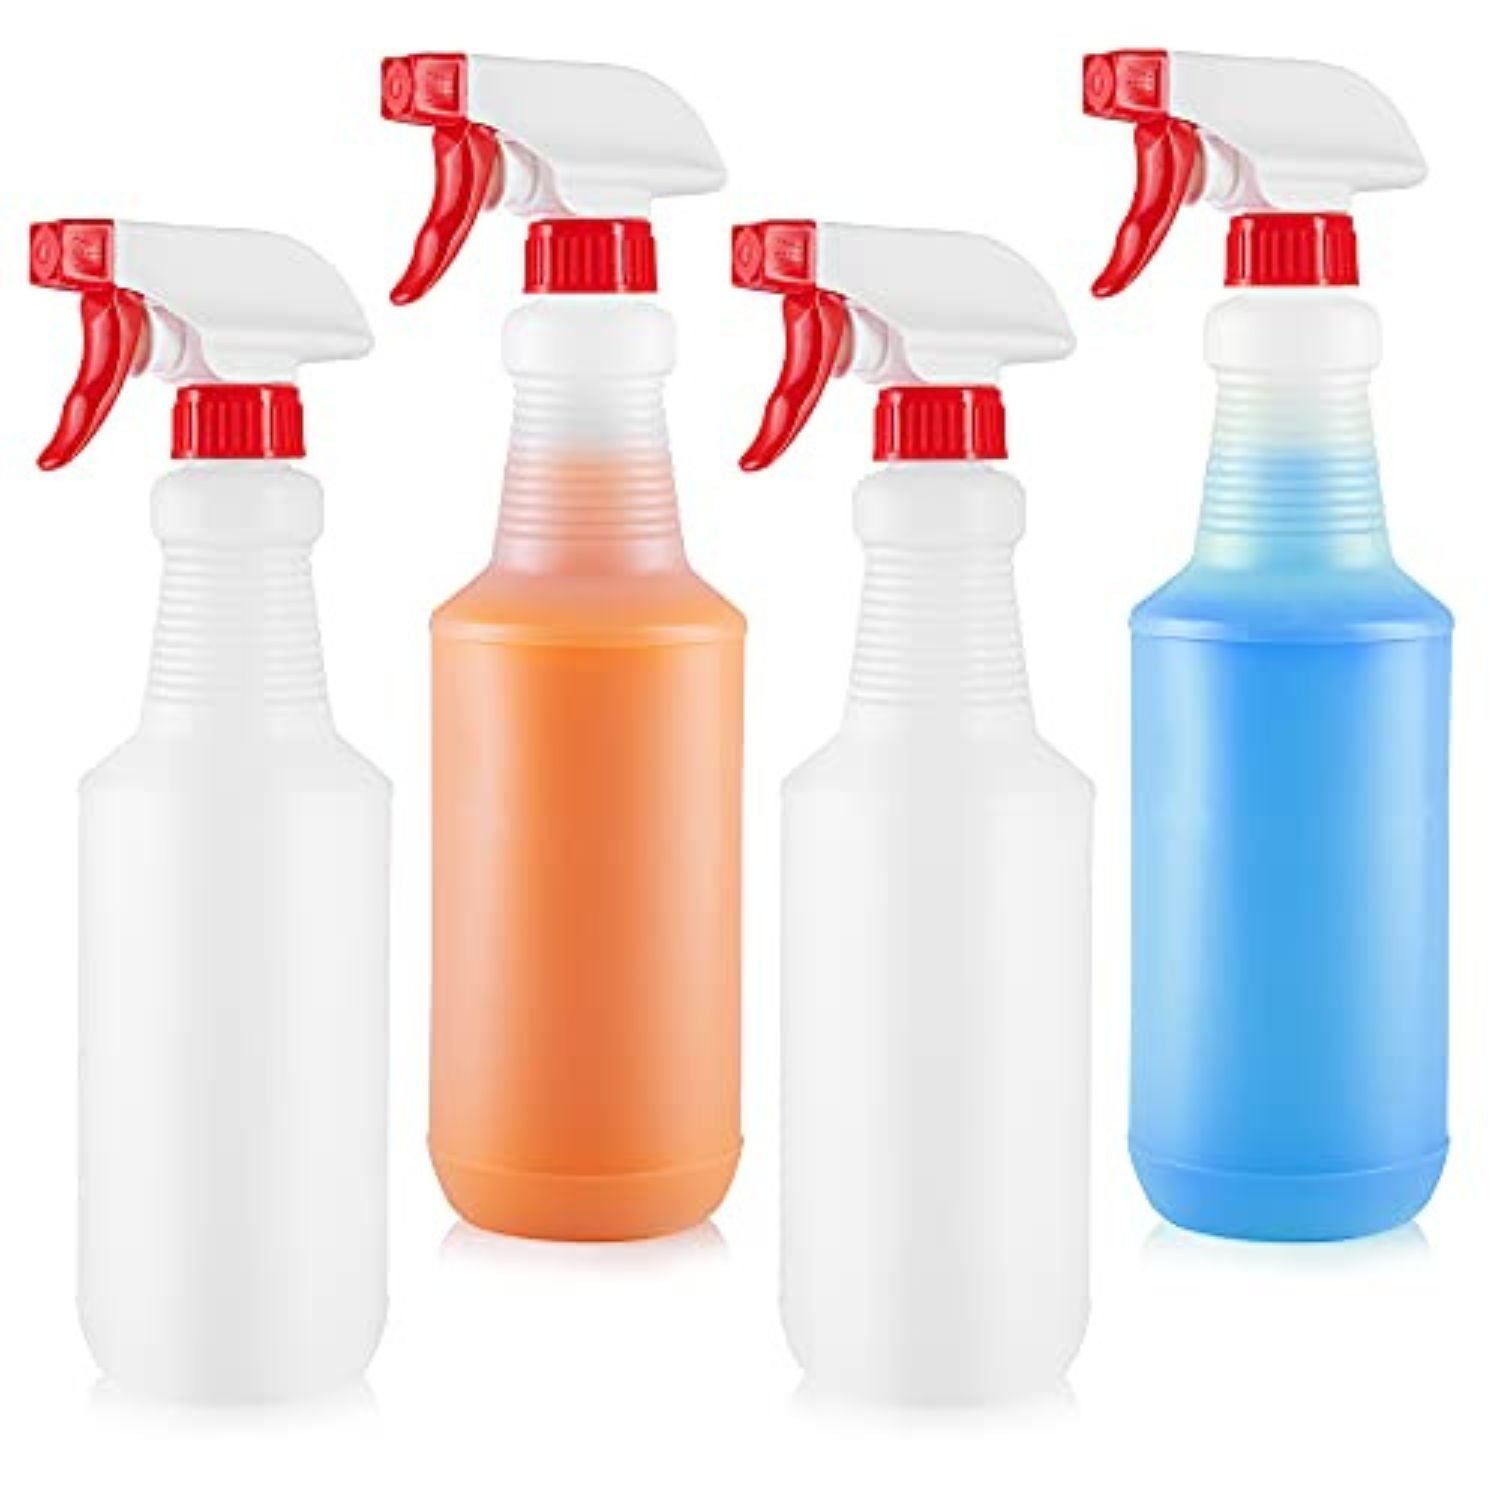 Zulay Home Spray Bottle